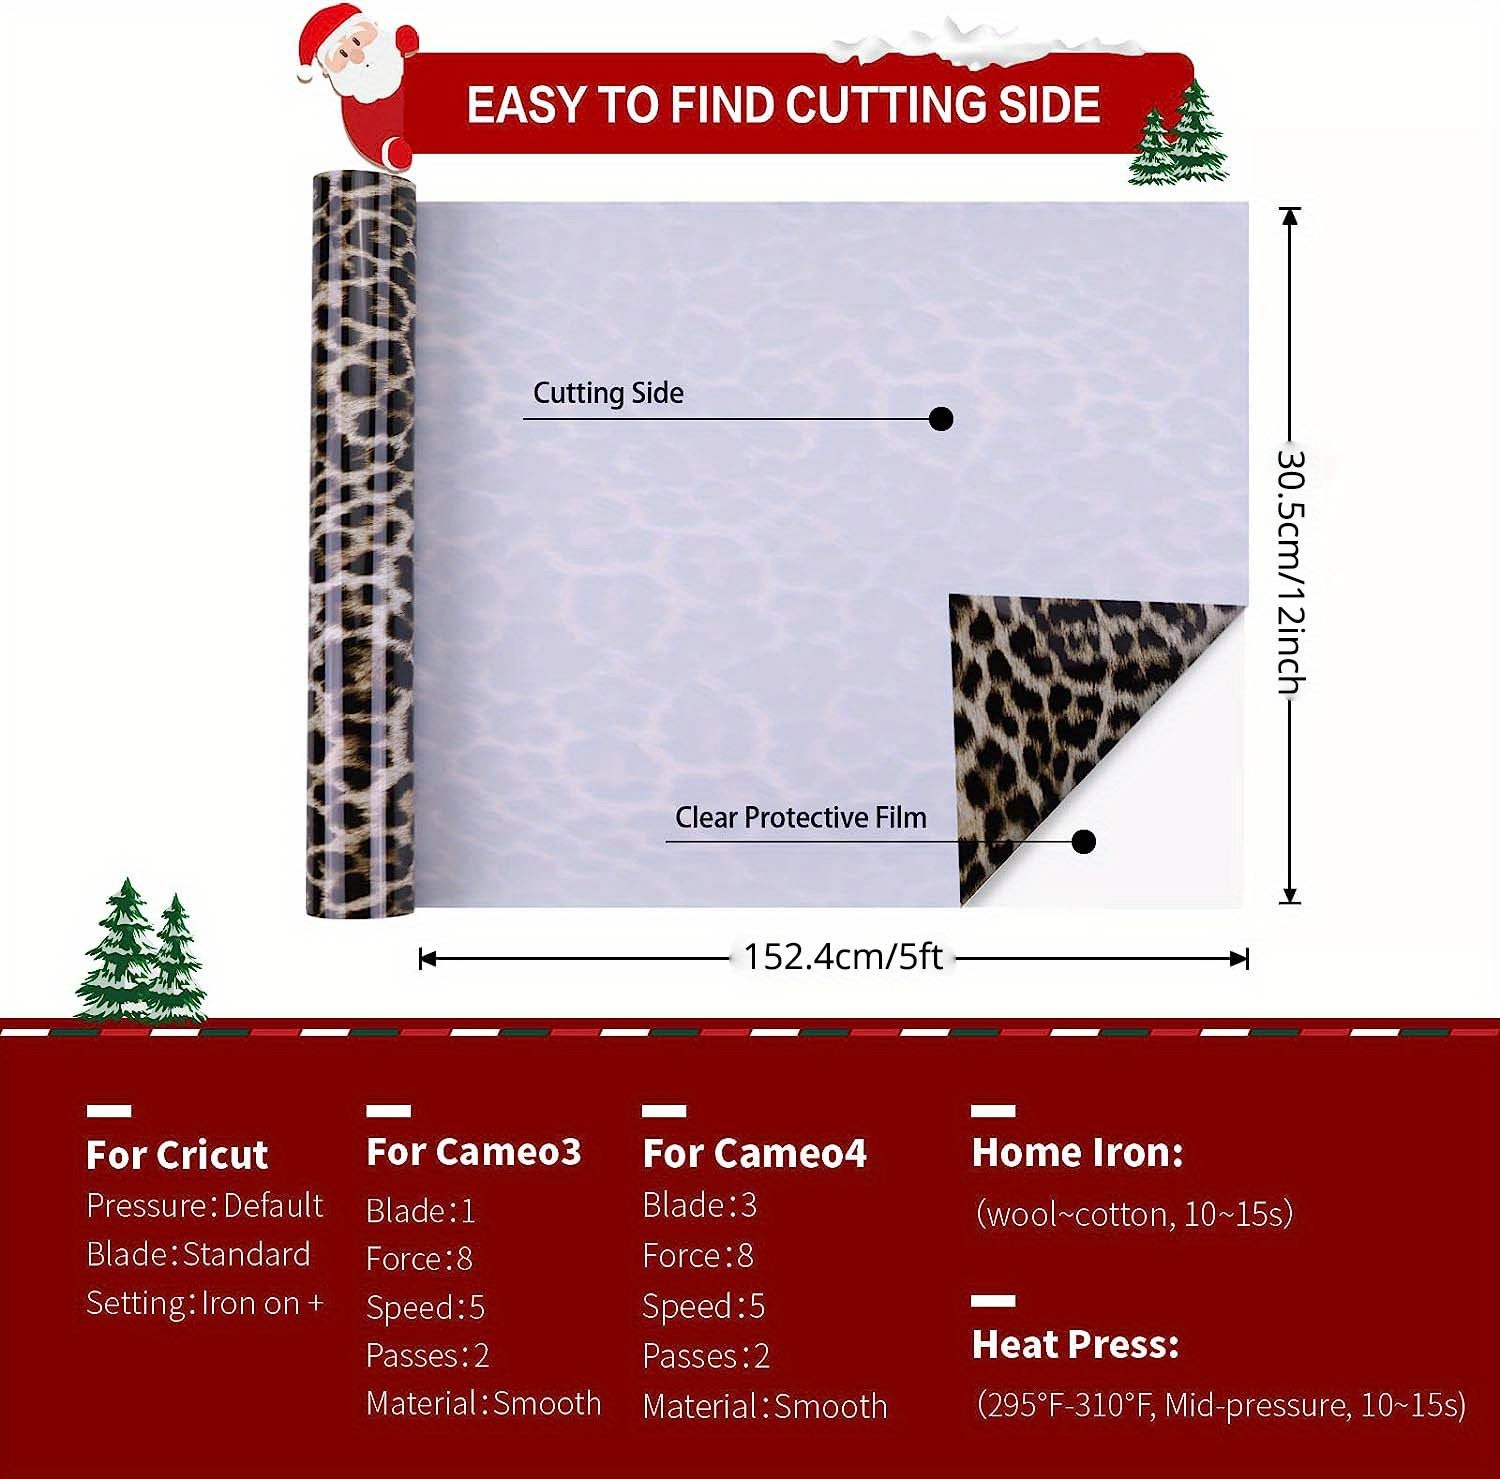 4th of July Leopard Puff Heat Transfer Vinyl Sheet – Hernandez Homemade  Blanks & More